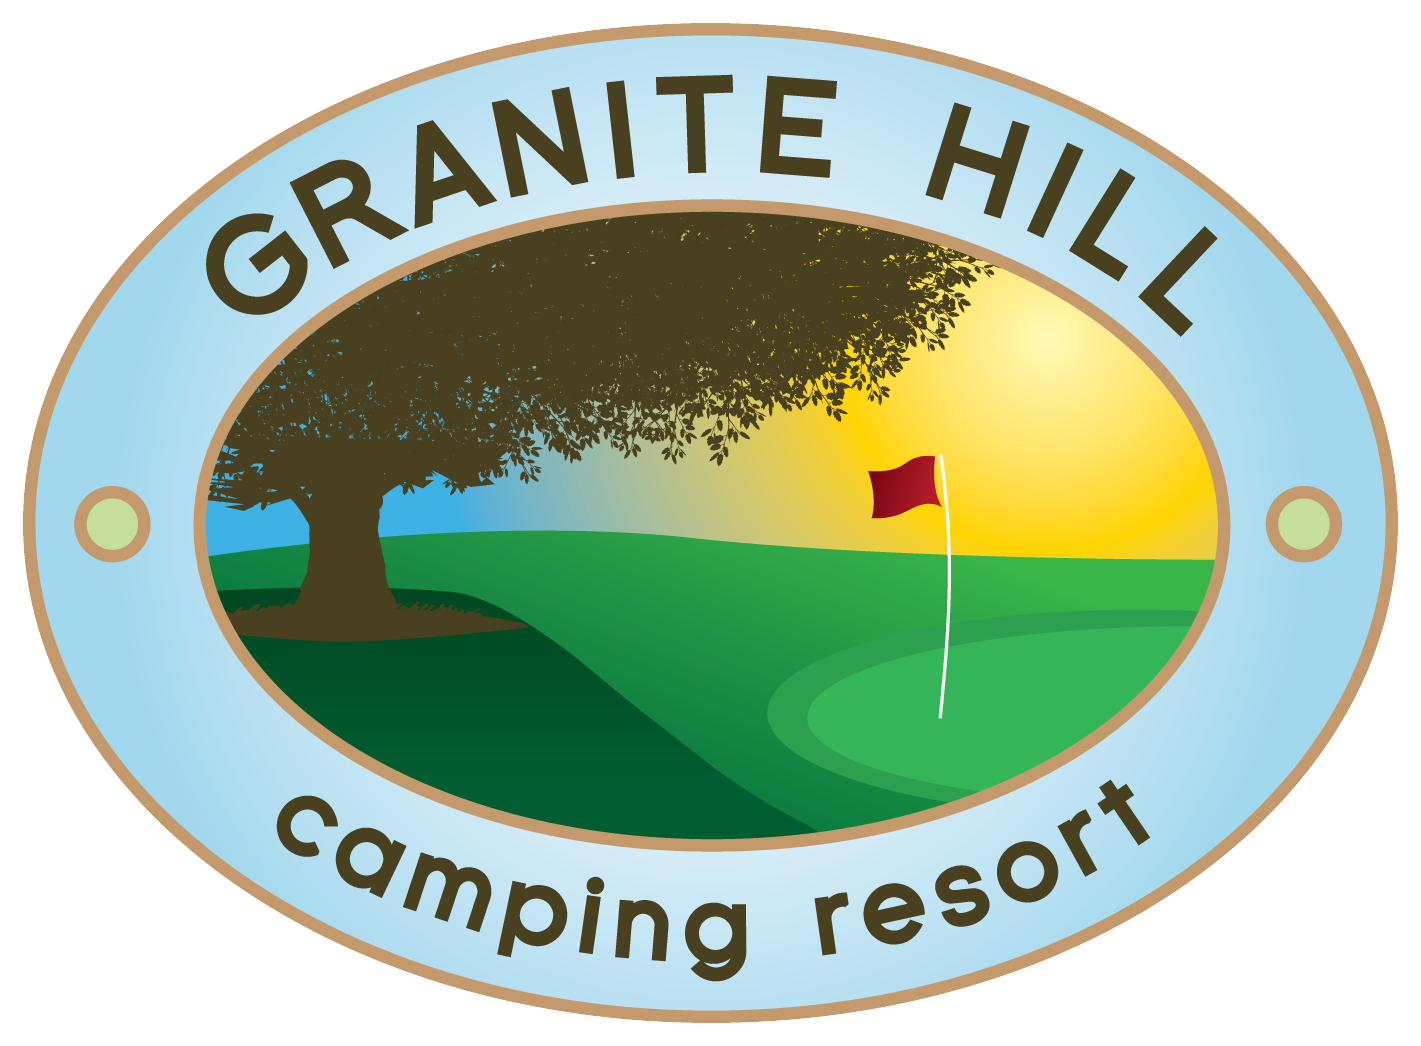 Granite Hill Campground